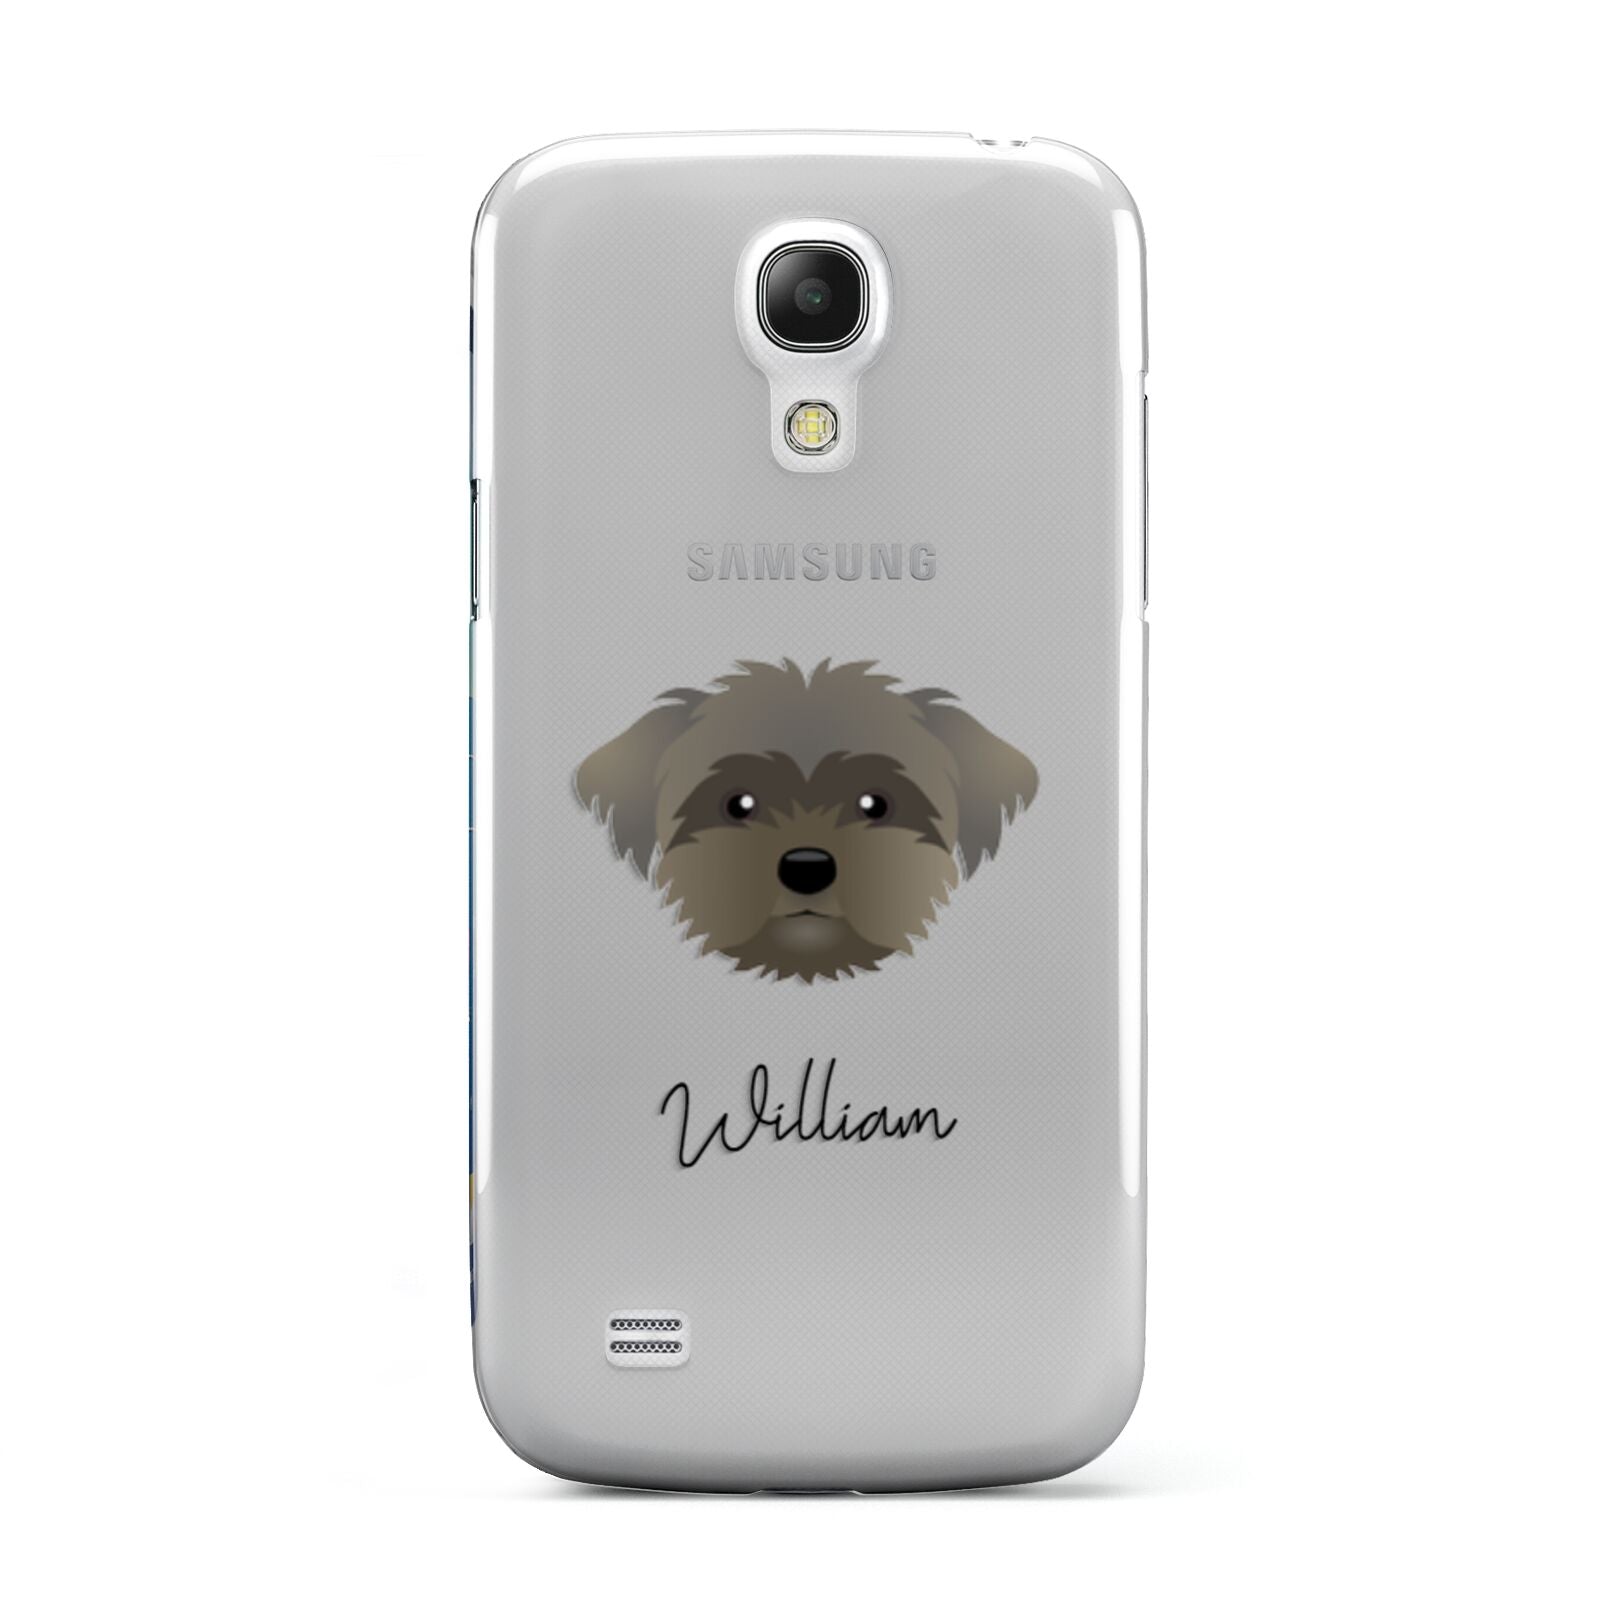 Peek a poo Personalised Samsung Galaxy S4 Mini Case